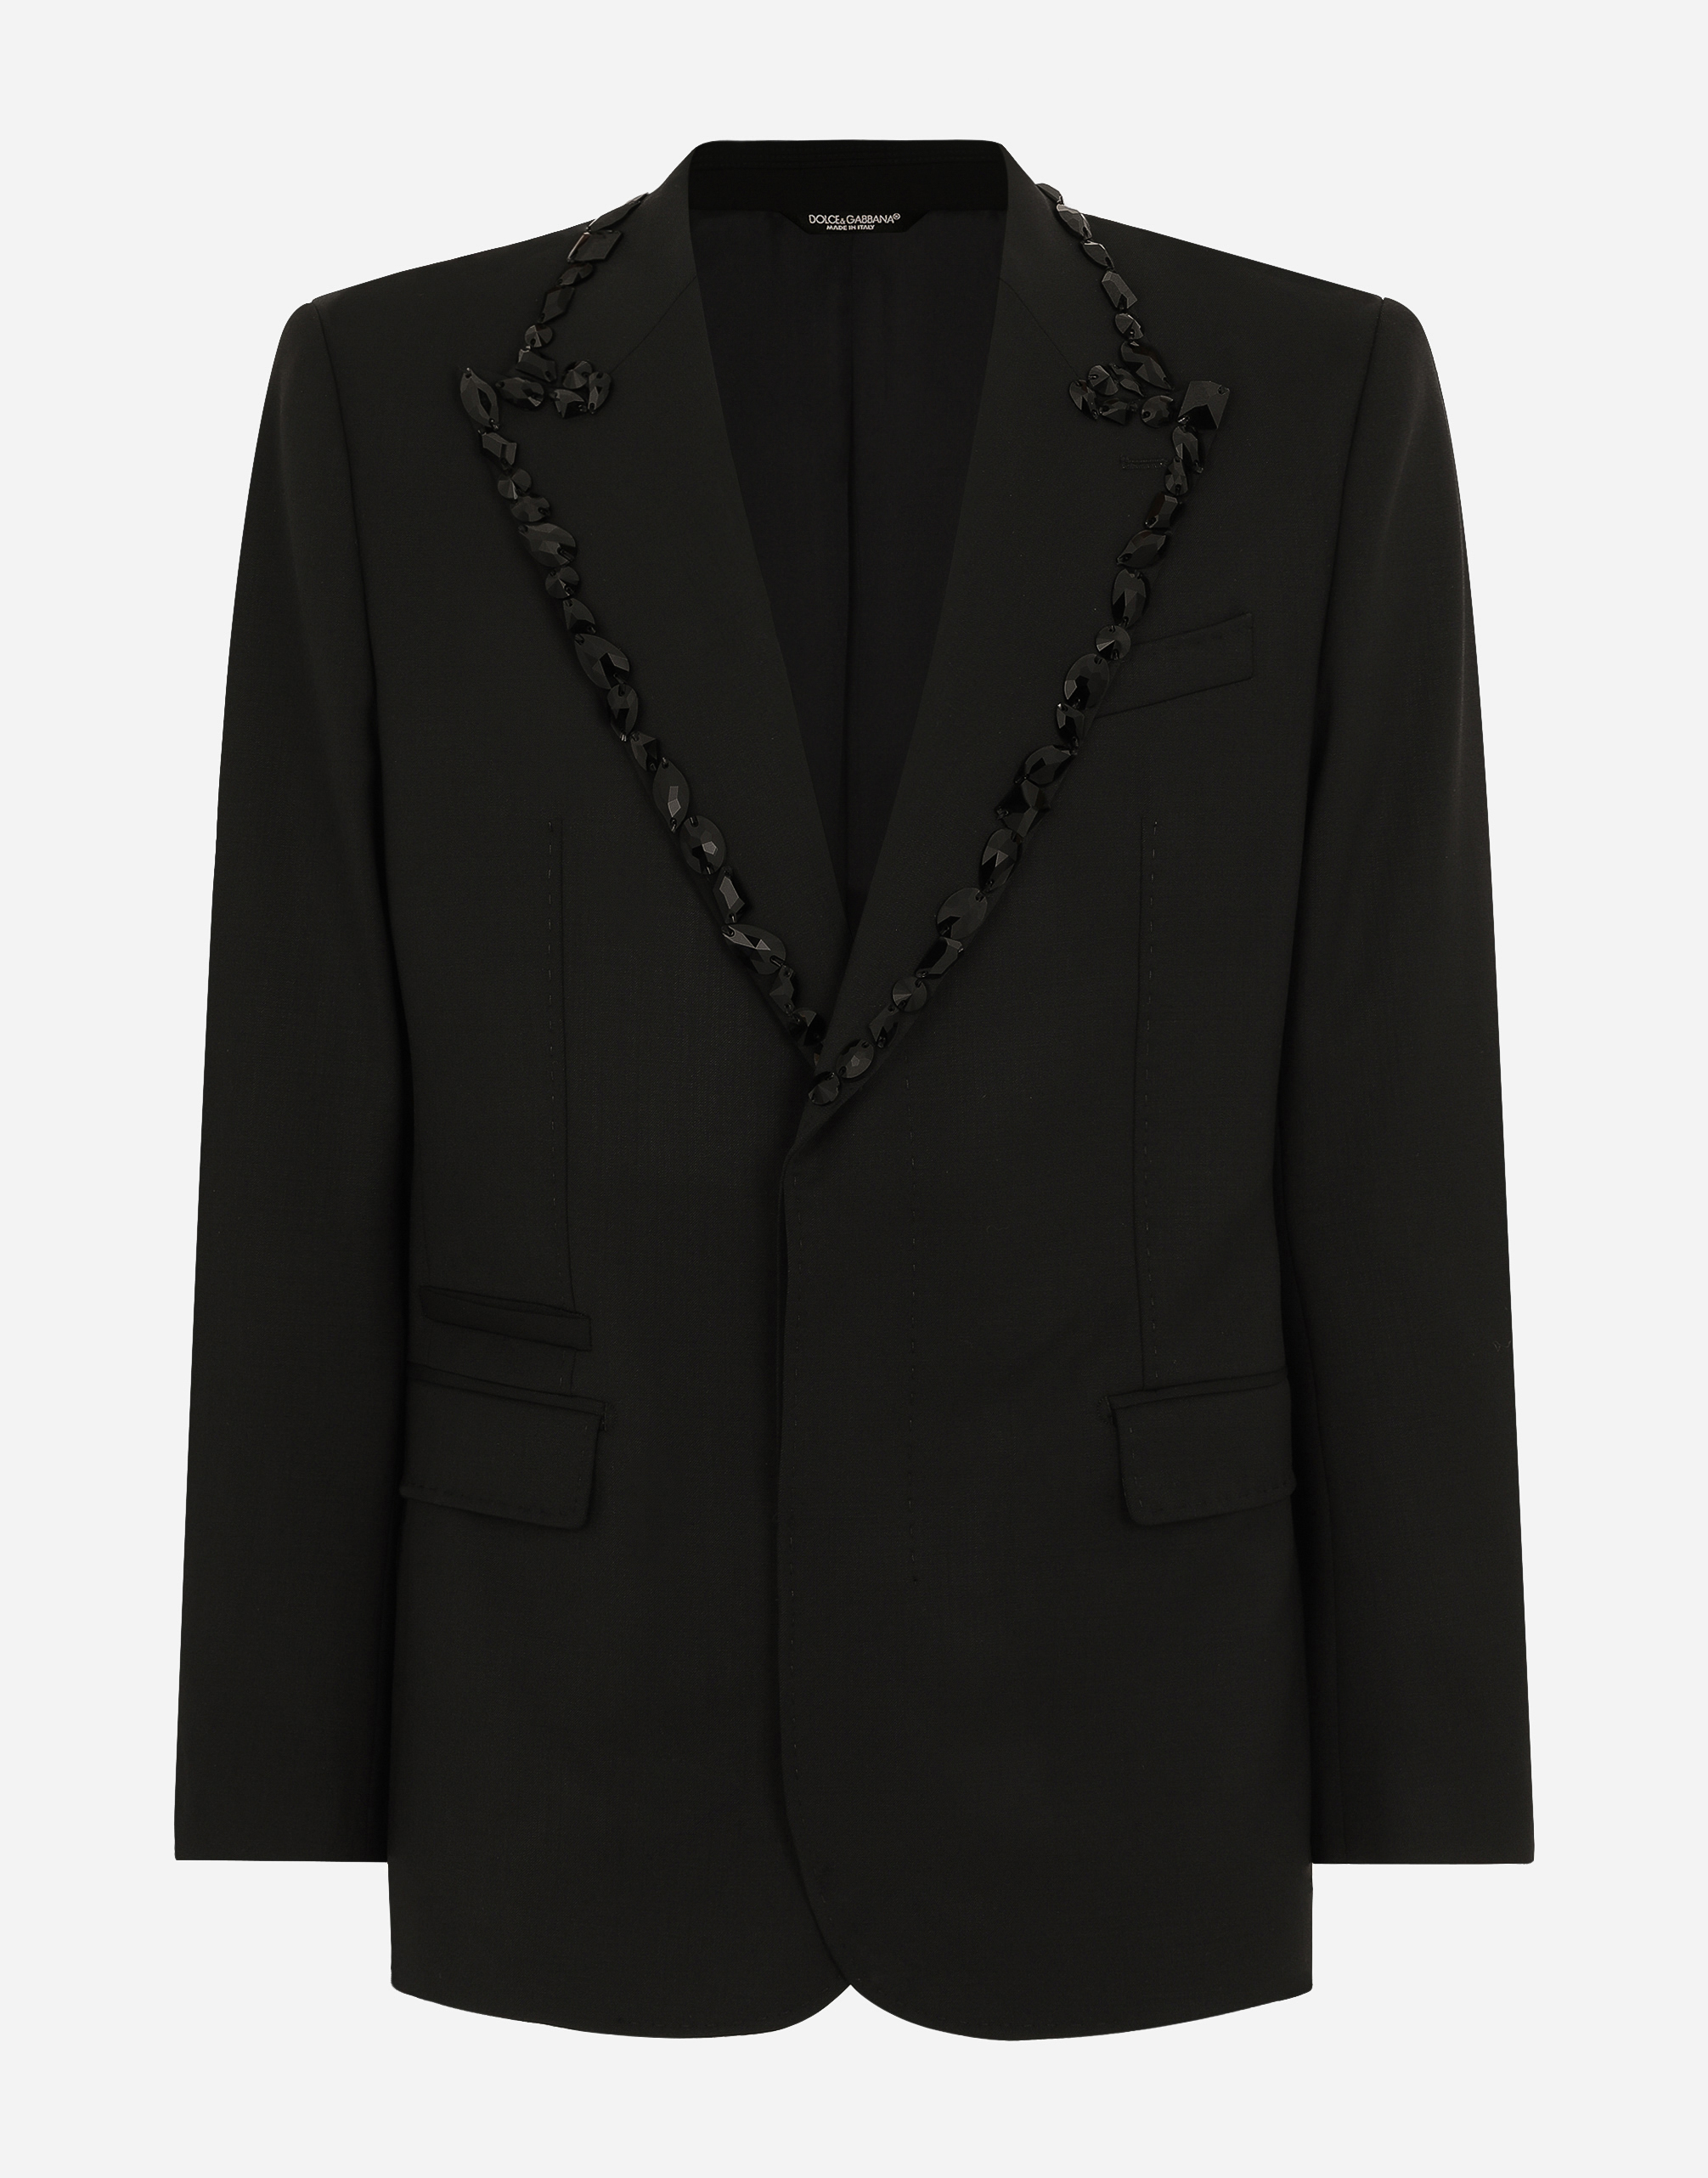 Sicilia single-breasted tuxedo jacket with rhinestones in Negro for 